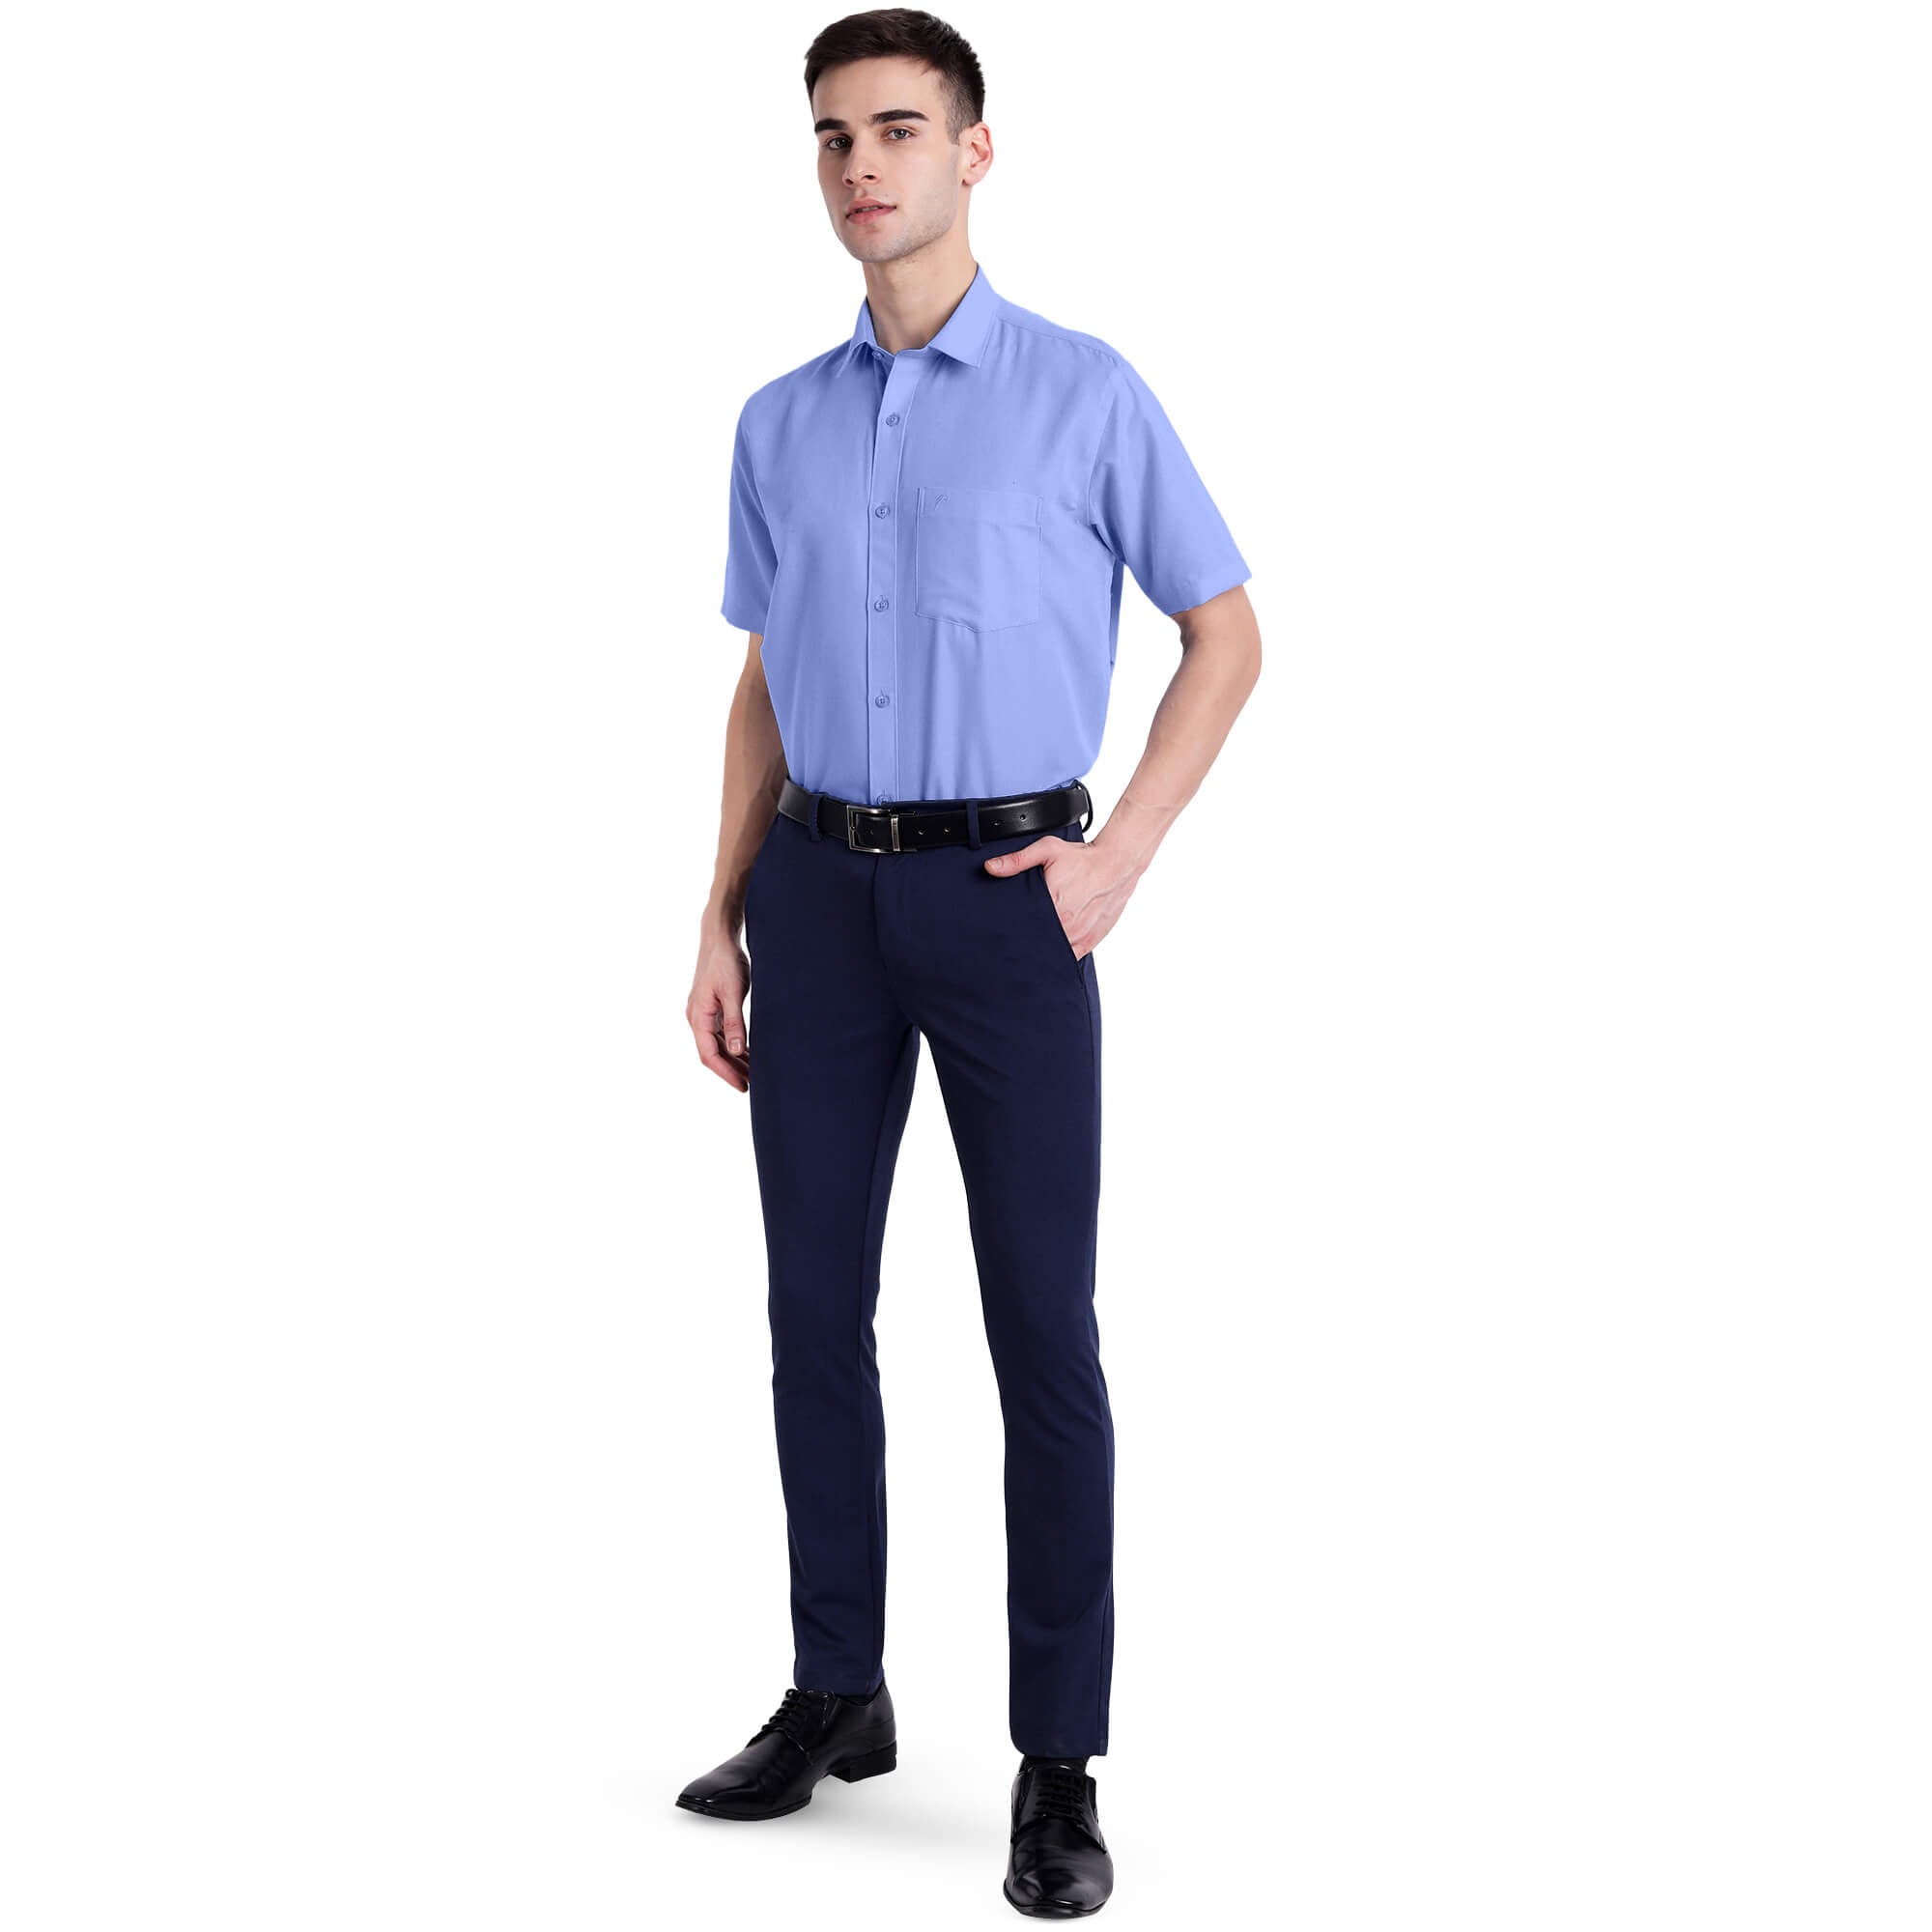 Poomer Elite Colour Shirt - Lavender